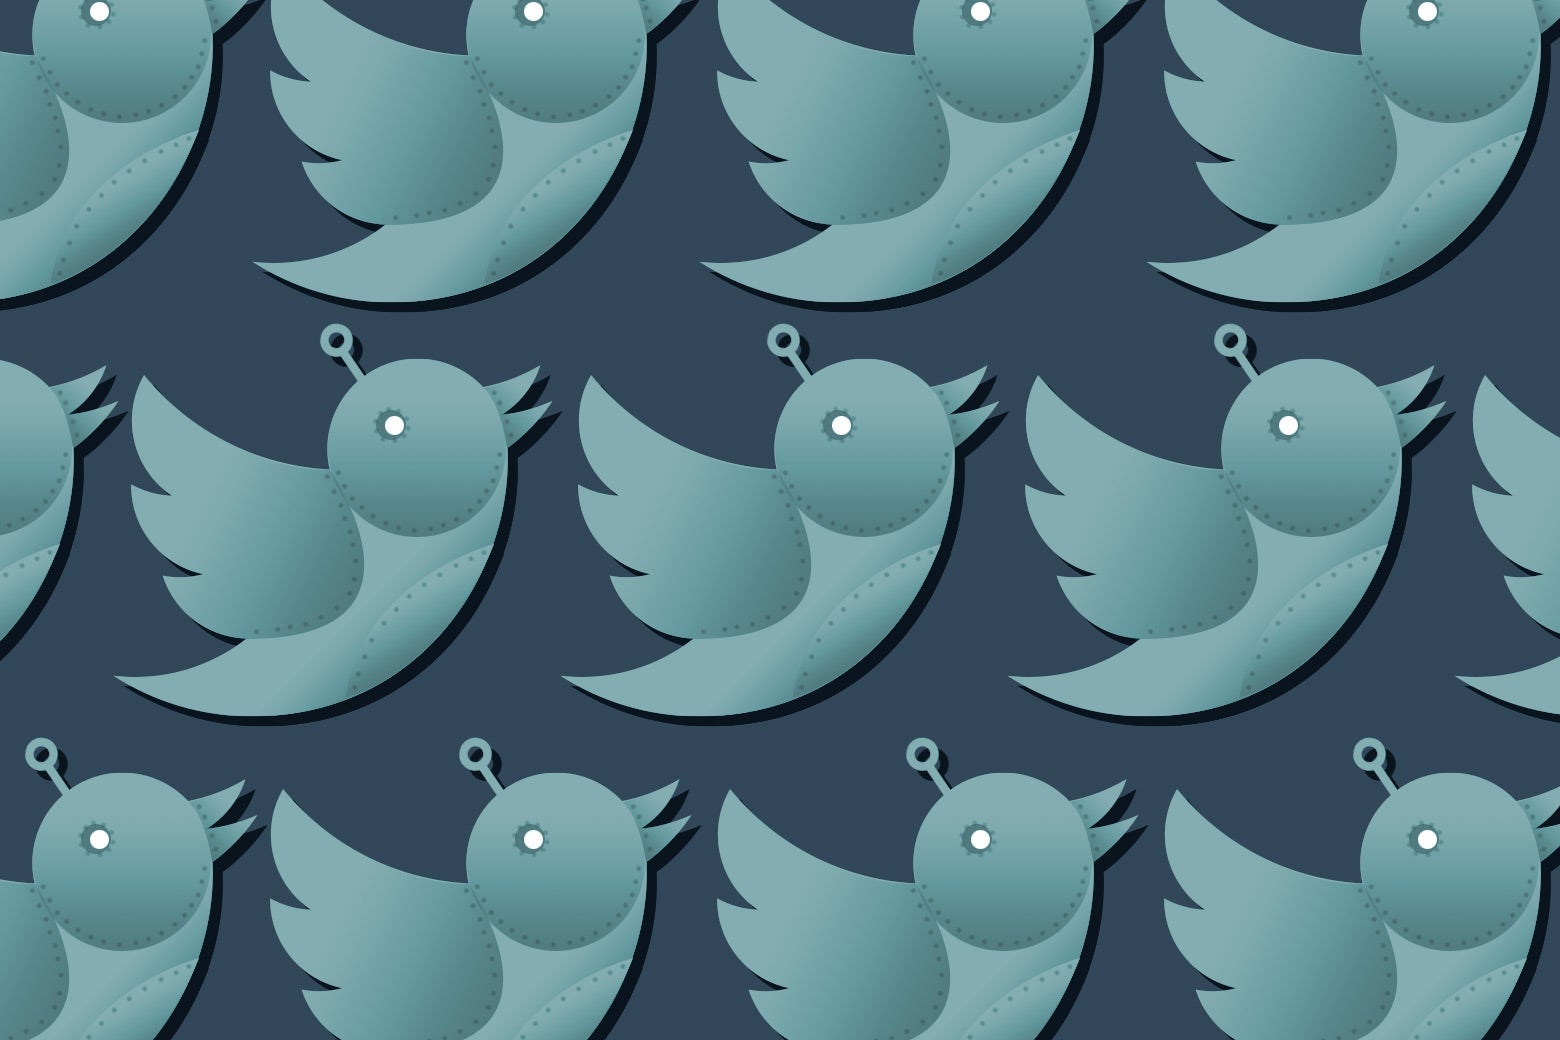 Three rows of Twitter birds